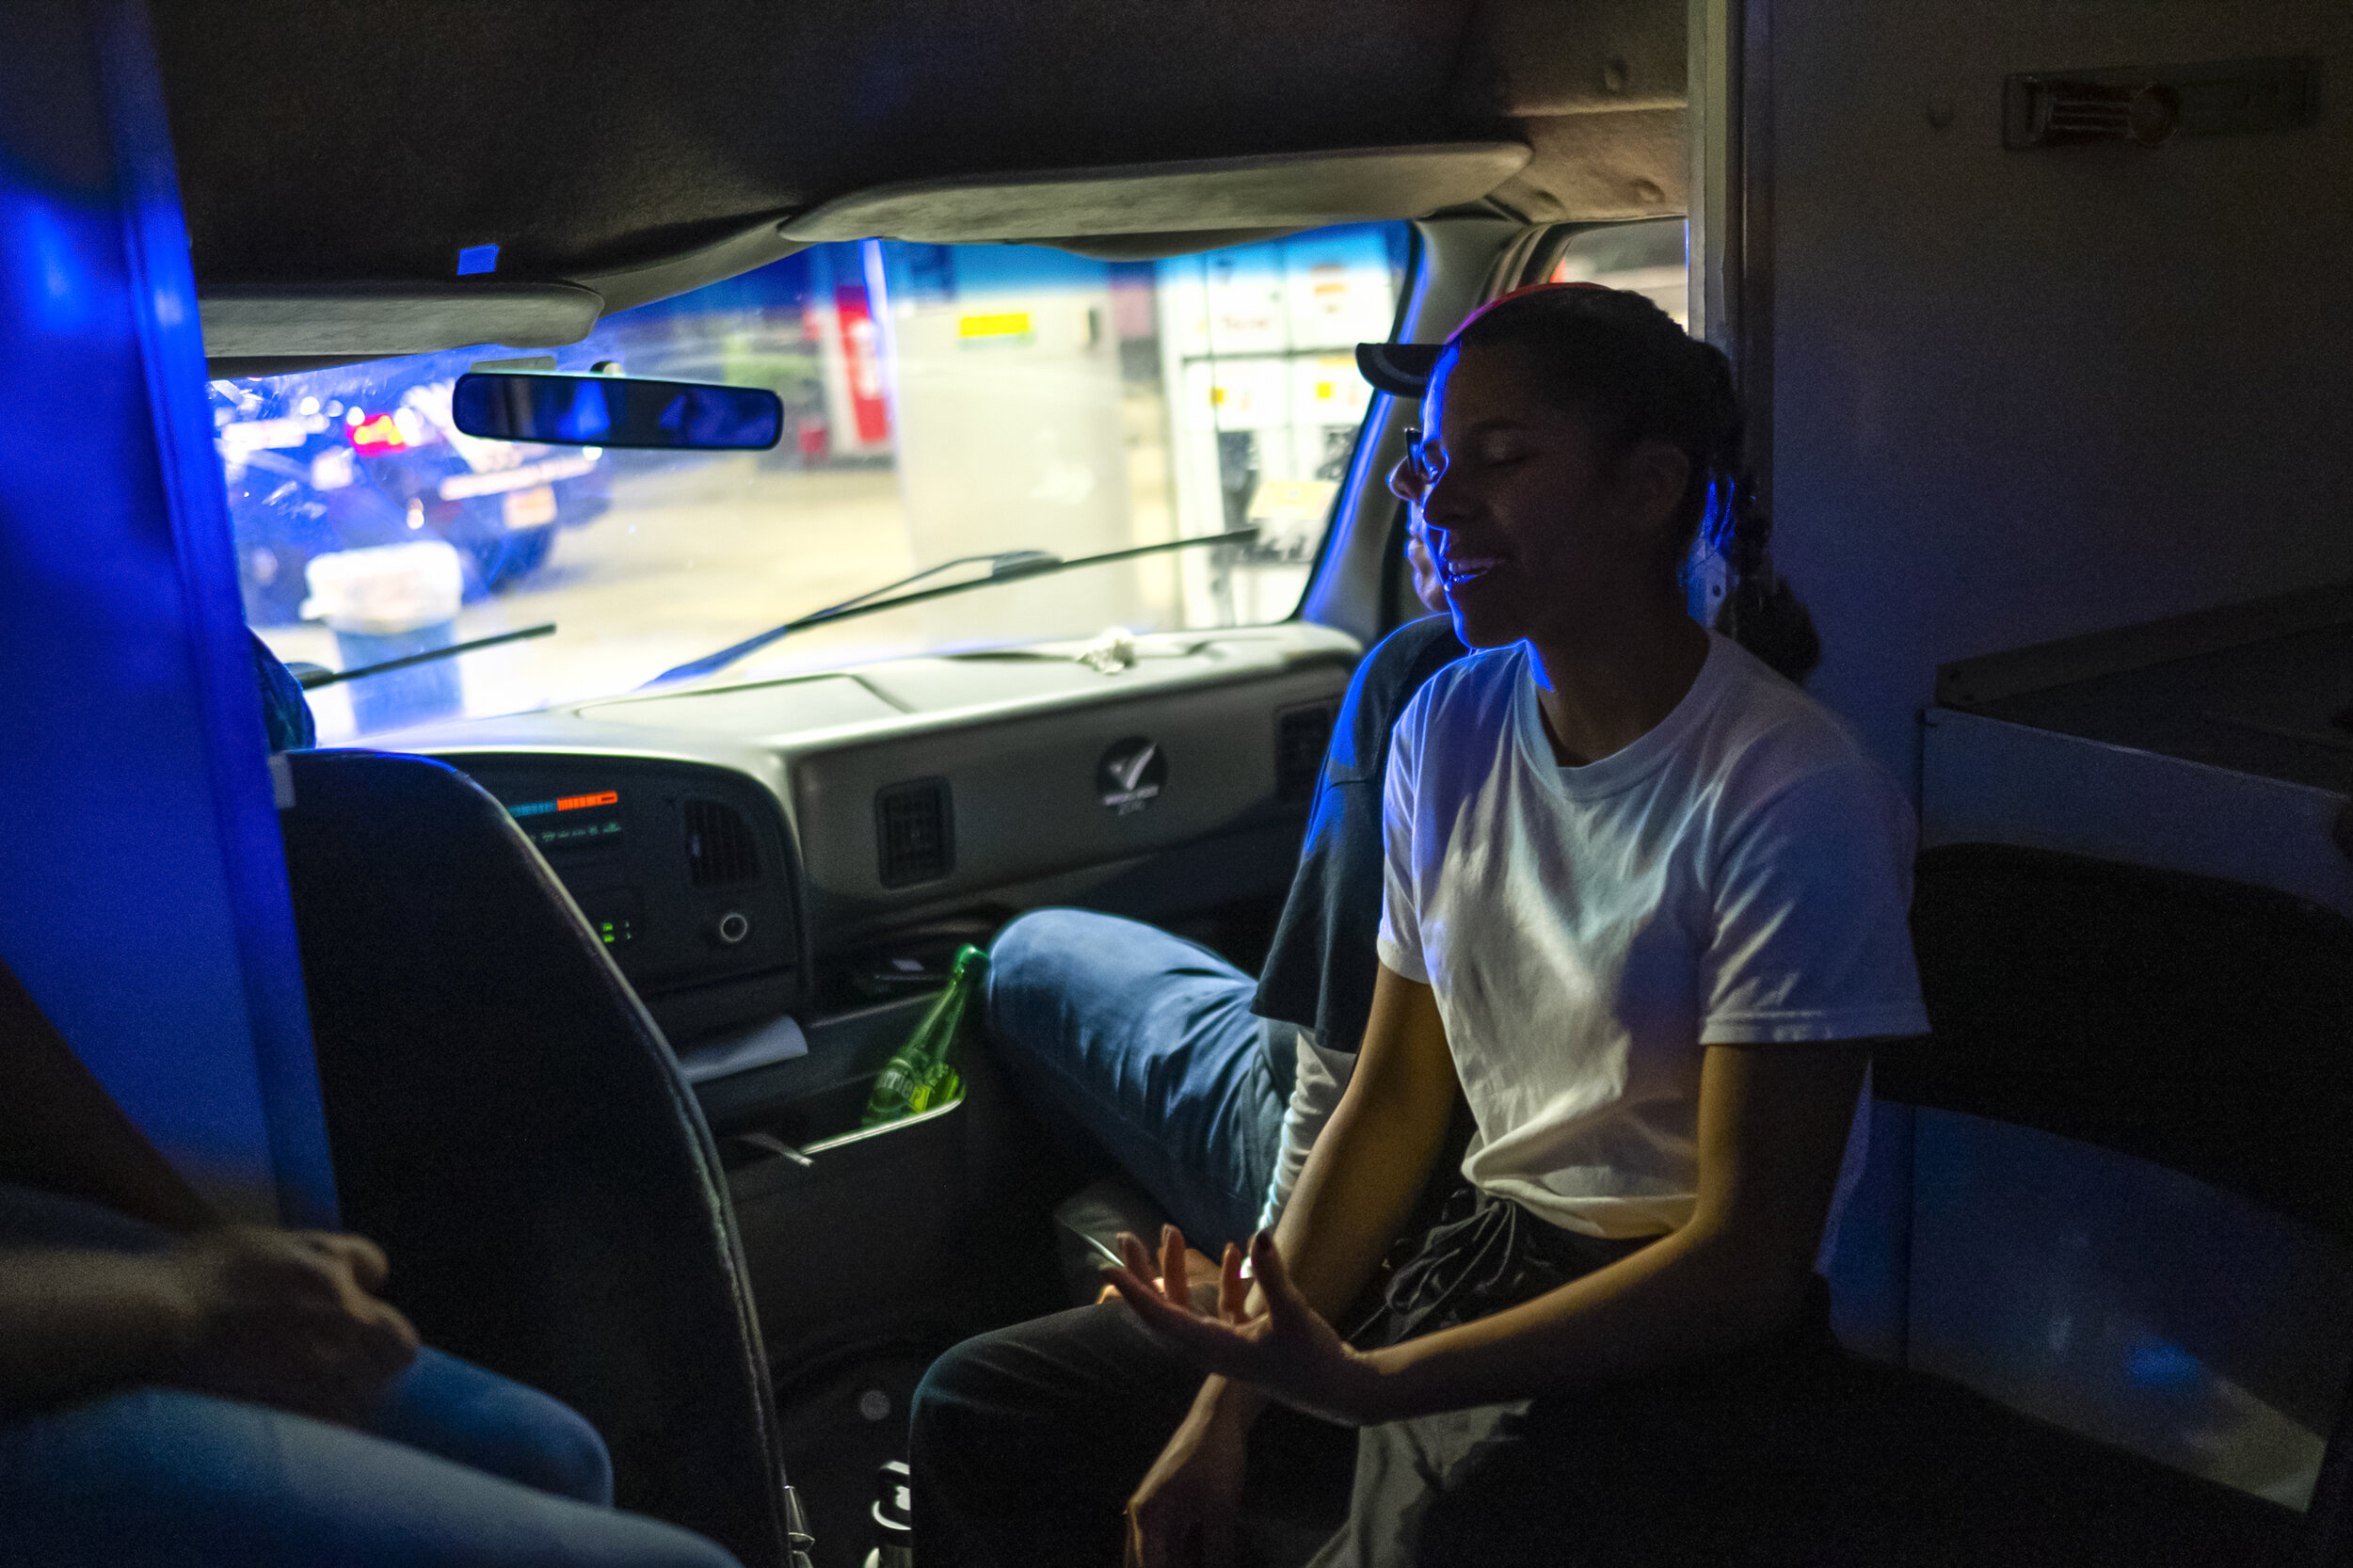  A young volunteer joyfully converses with her peers inside the van of Operación Compasión. 